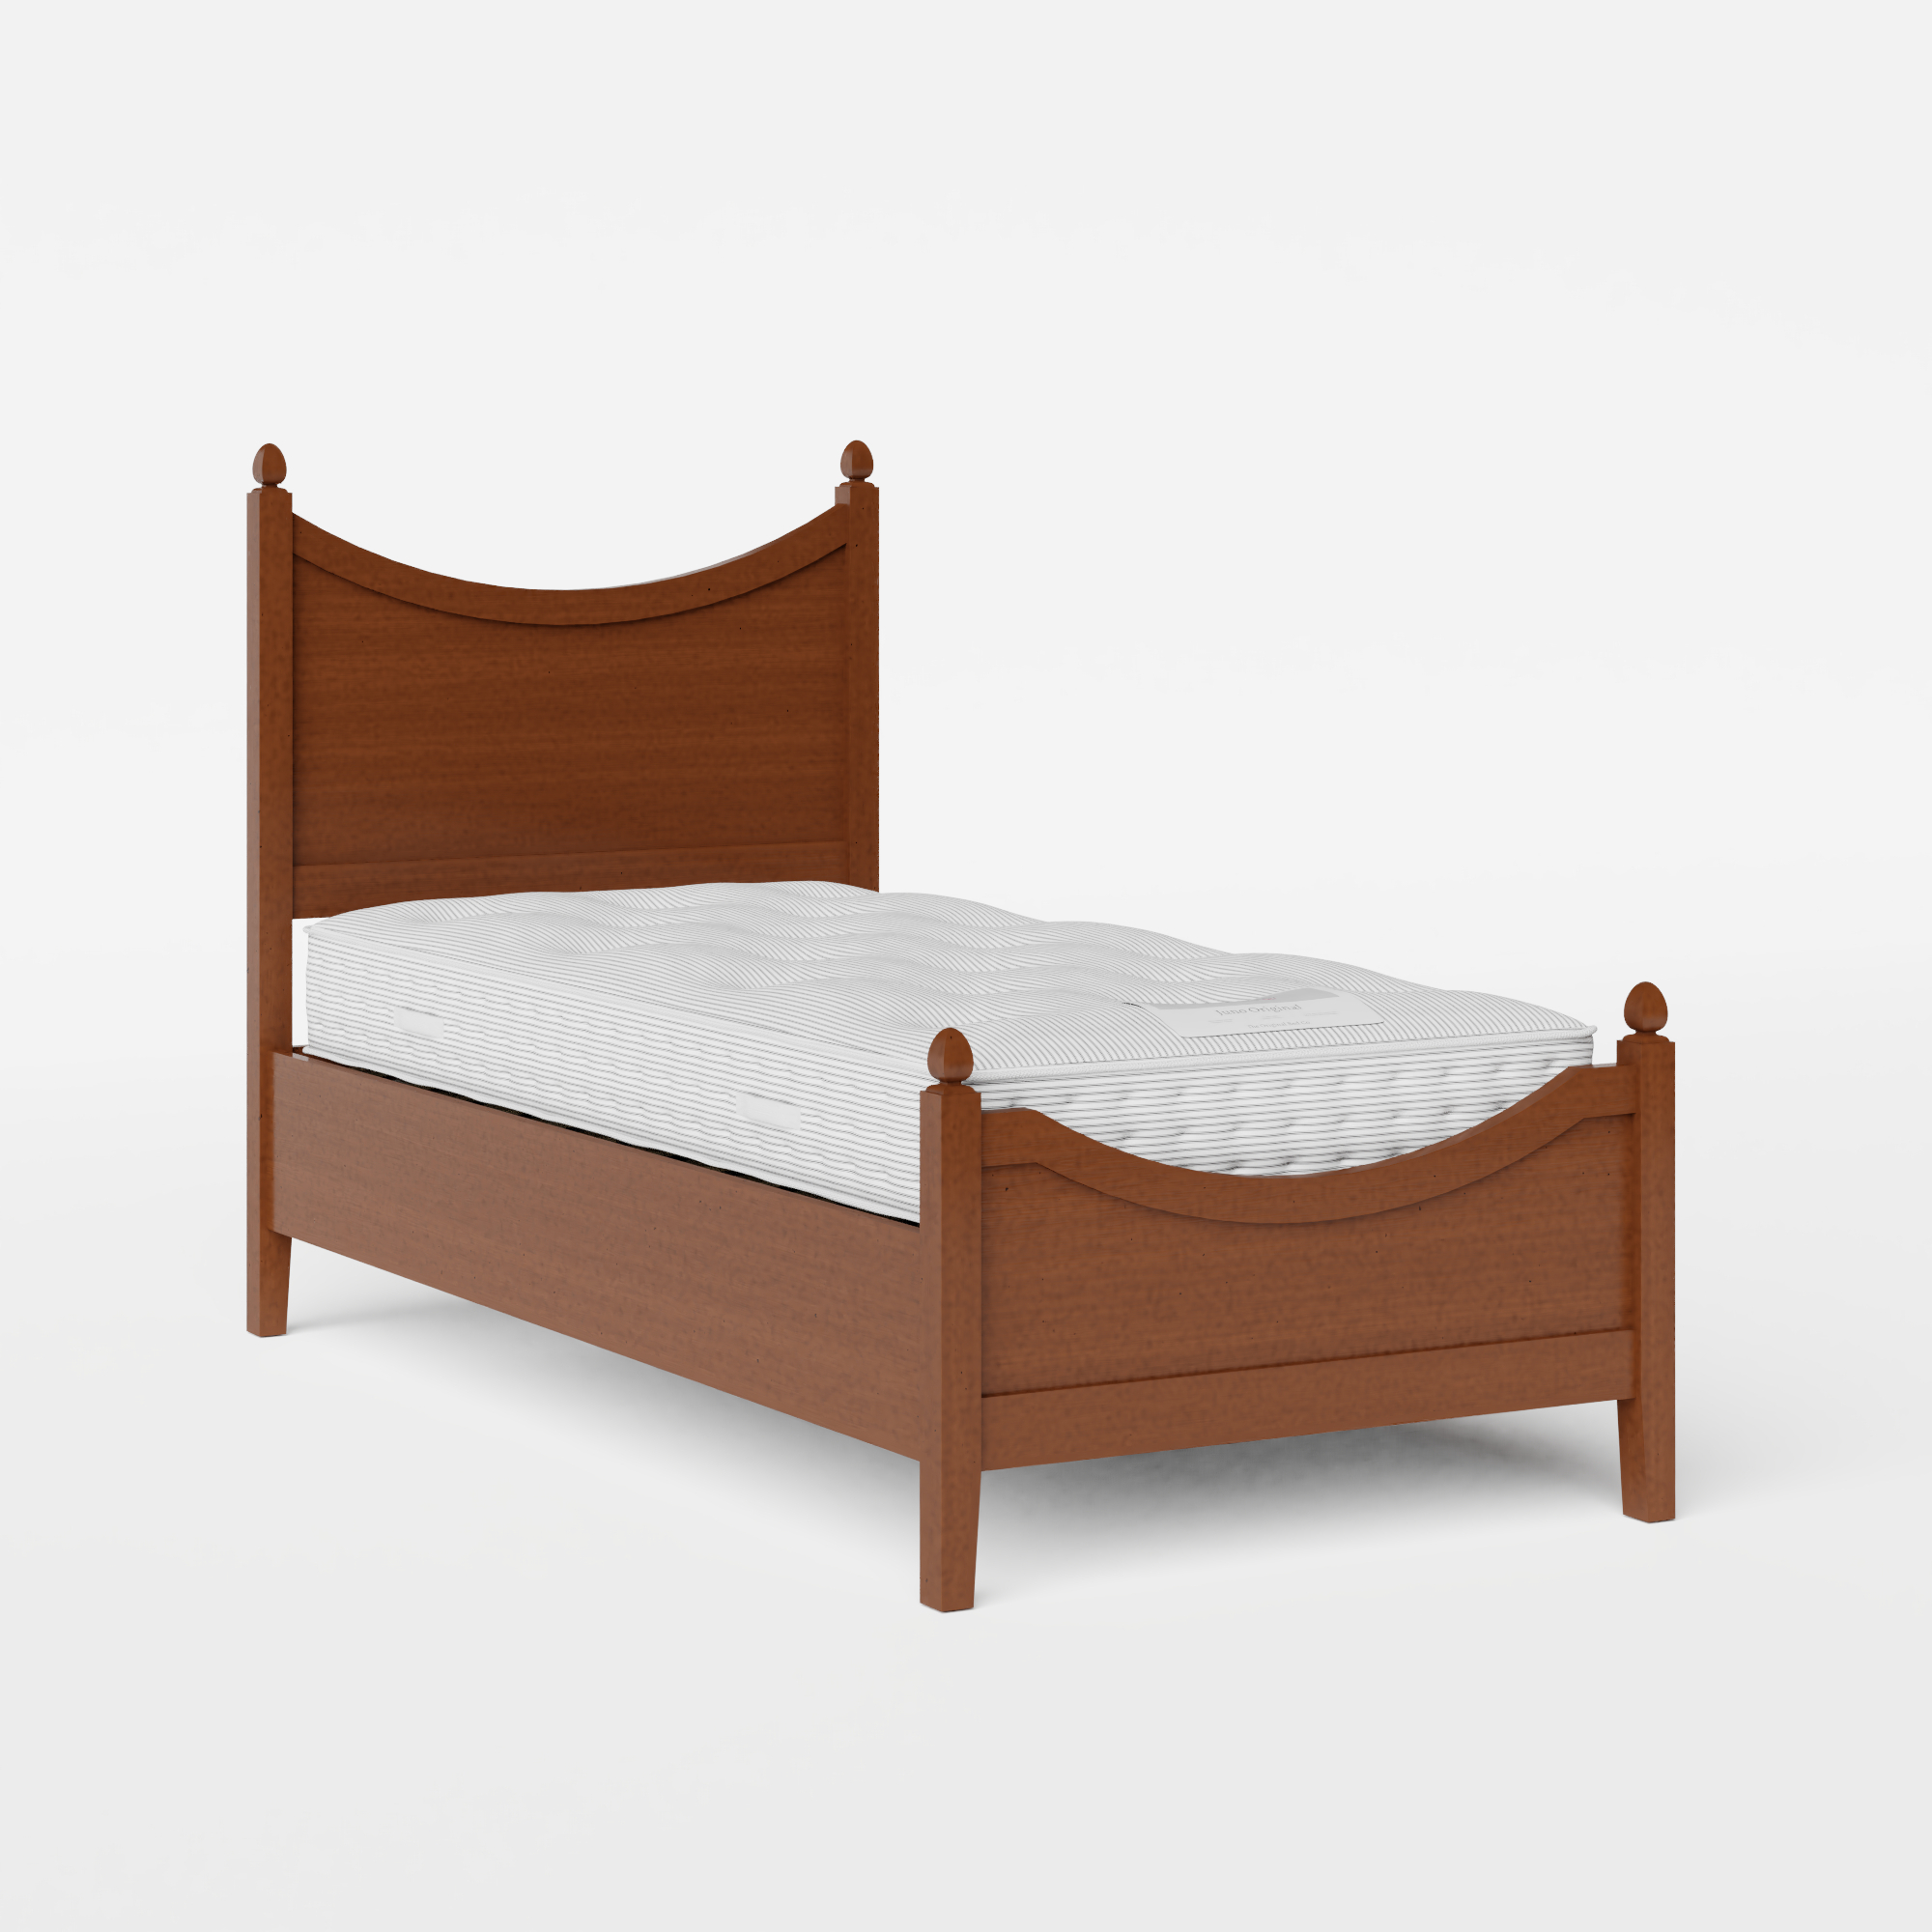 Blake Low Footend single wood bed in dark cherry with Juno mattress